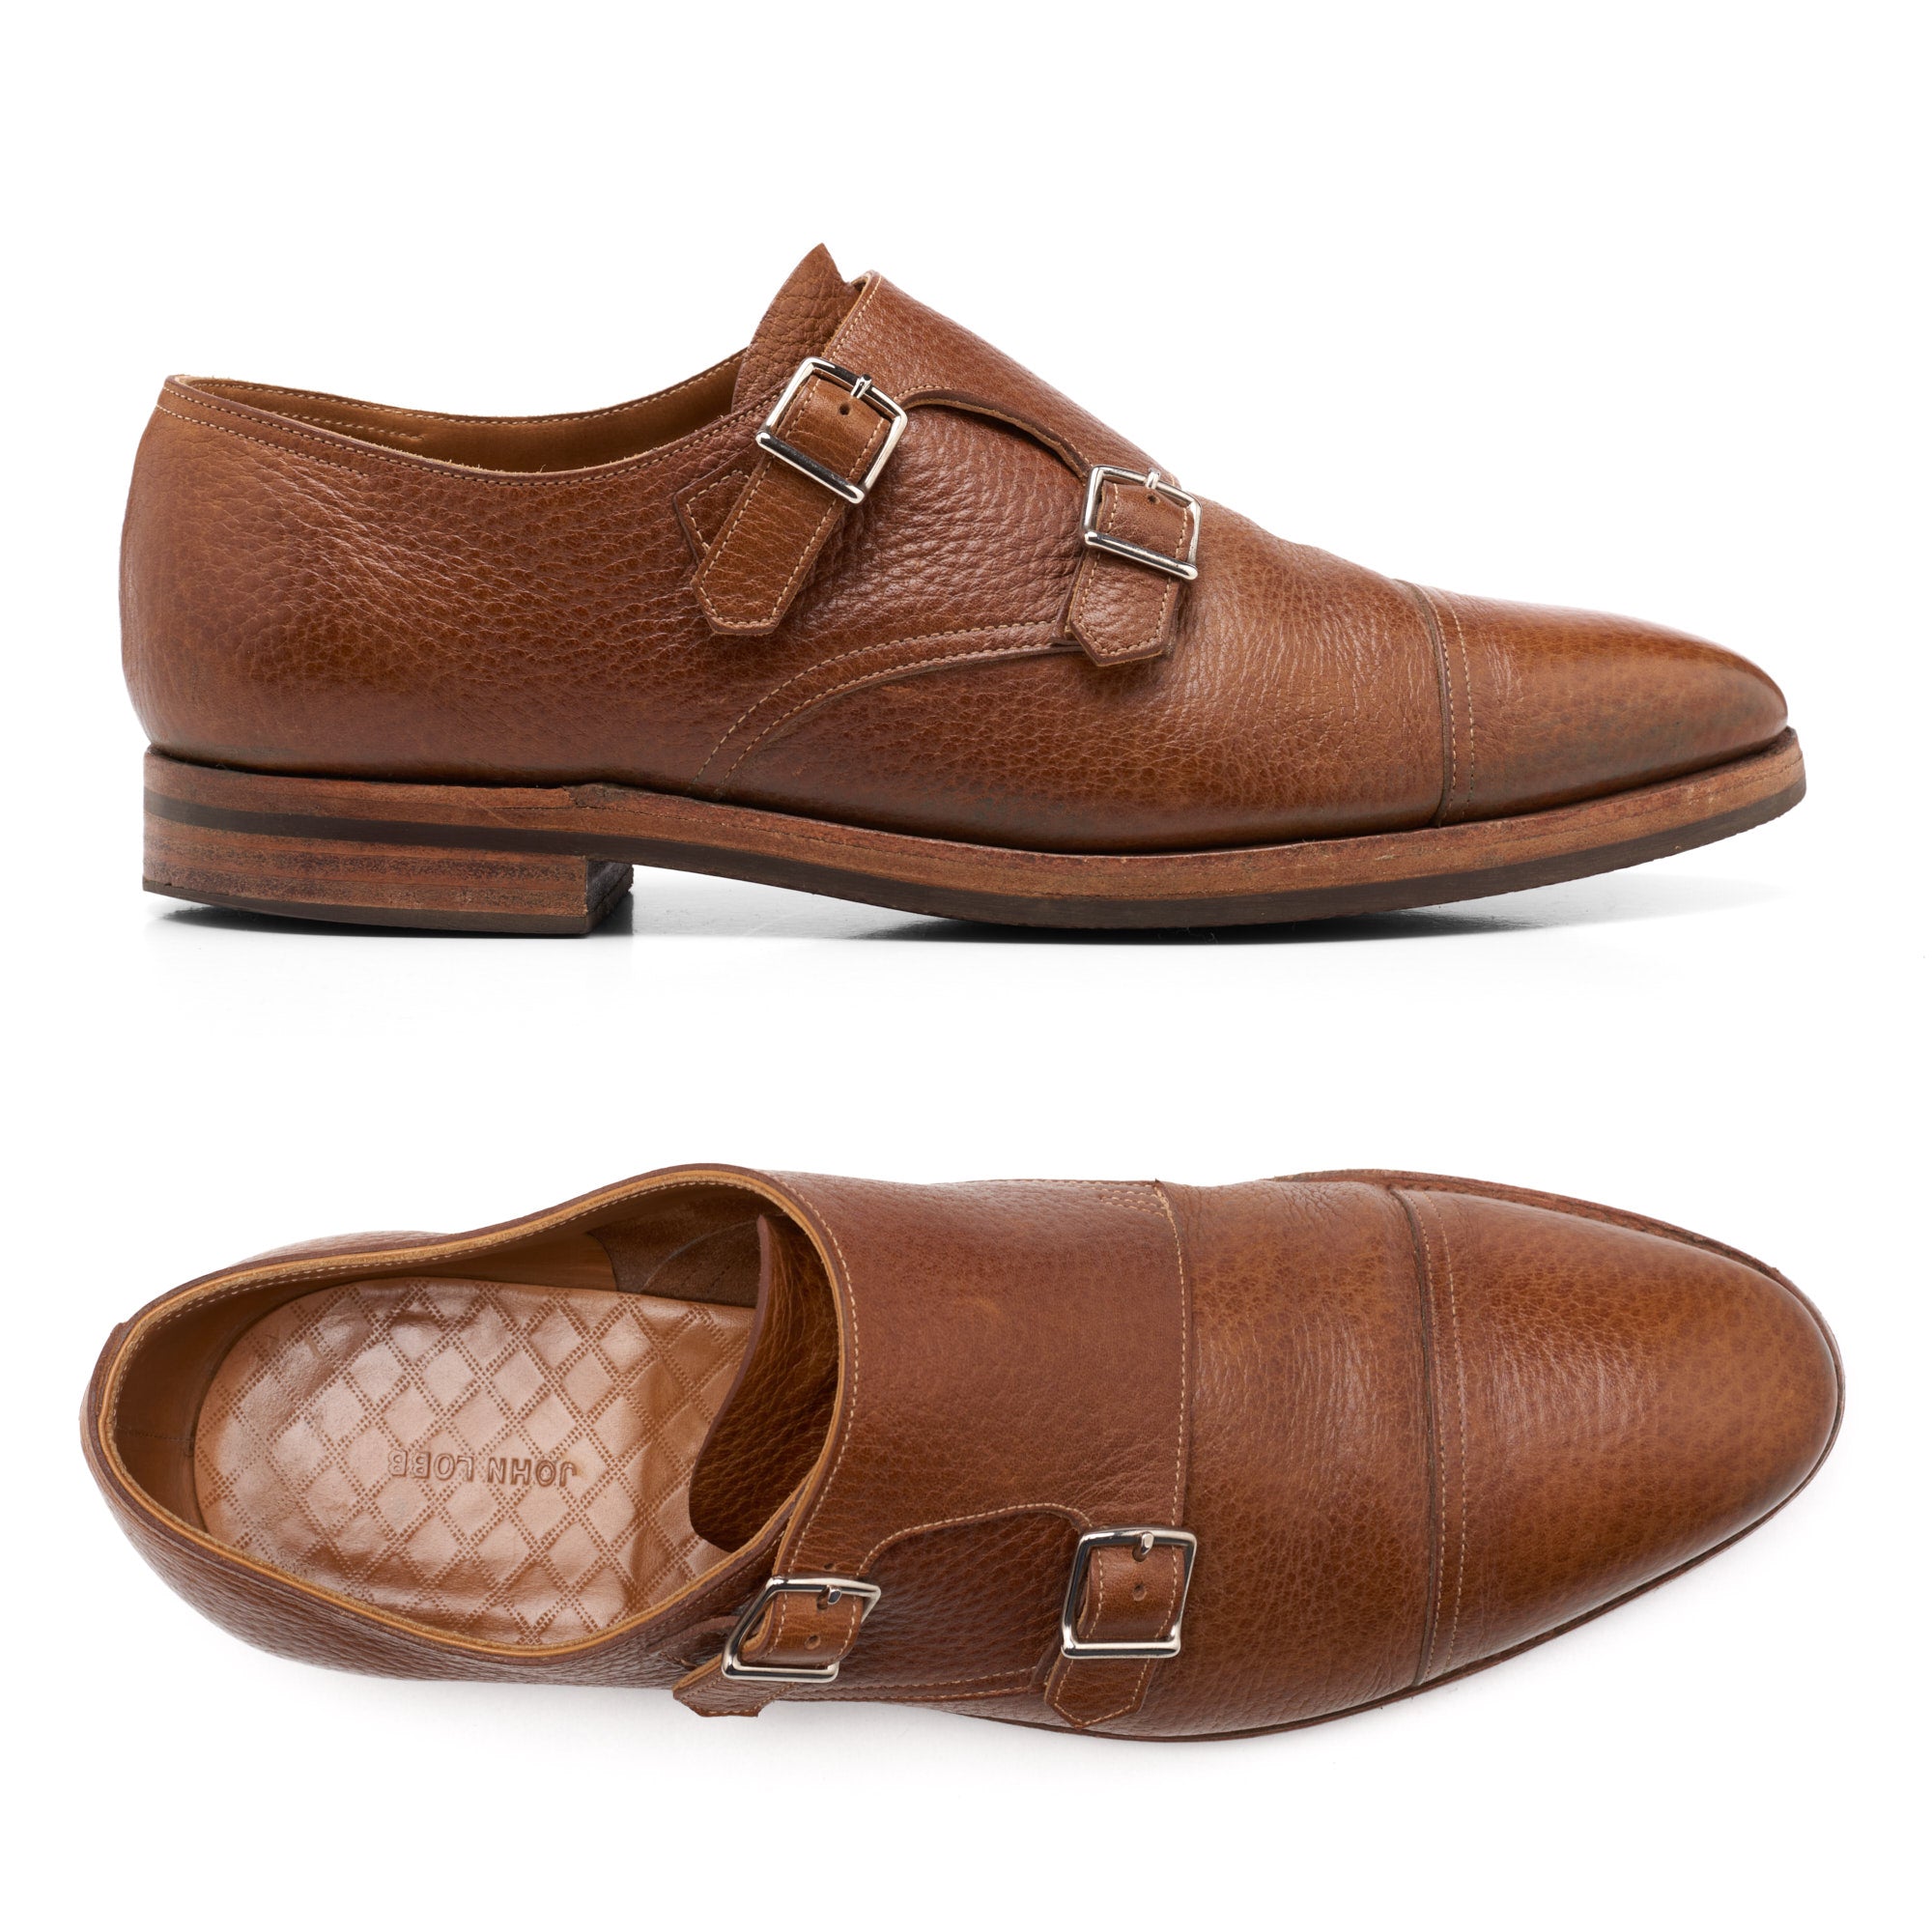 JOHN LOBB "William" Brown Leather Double Monk Shoes UK 8.5E US 9.5 Last 9795